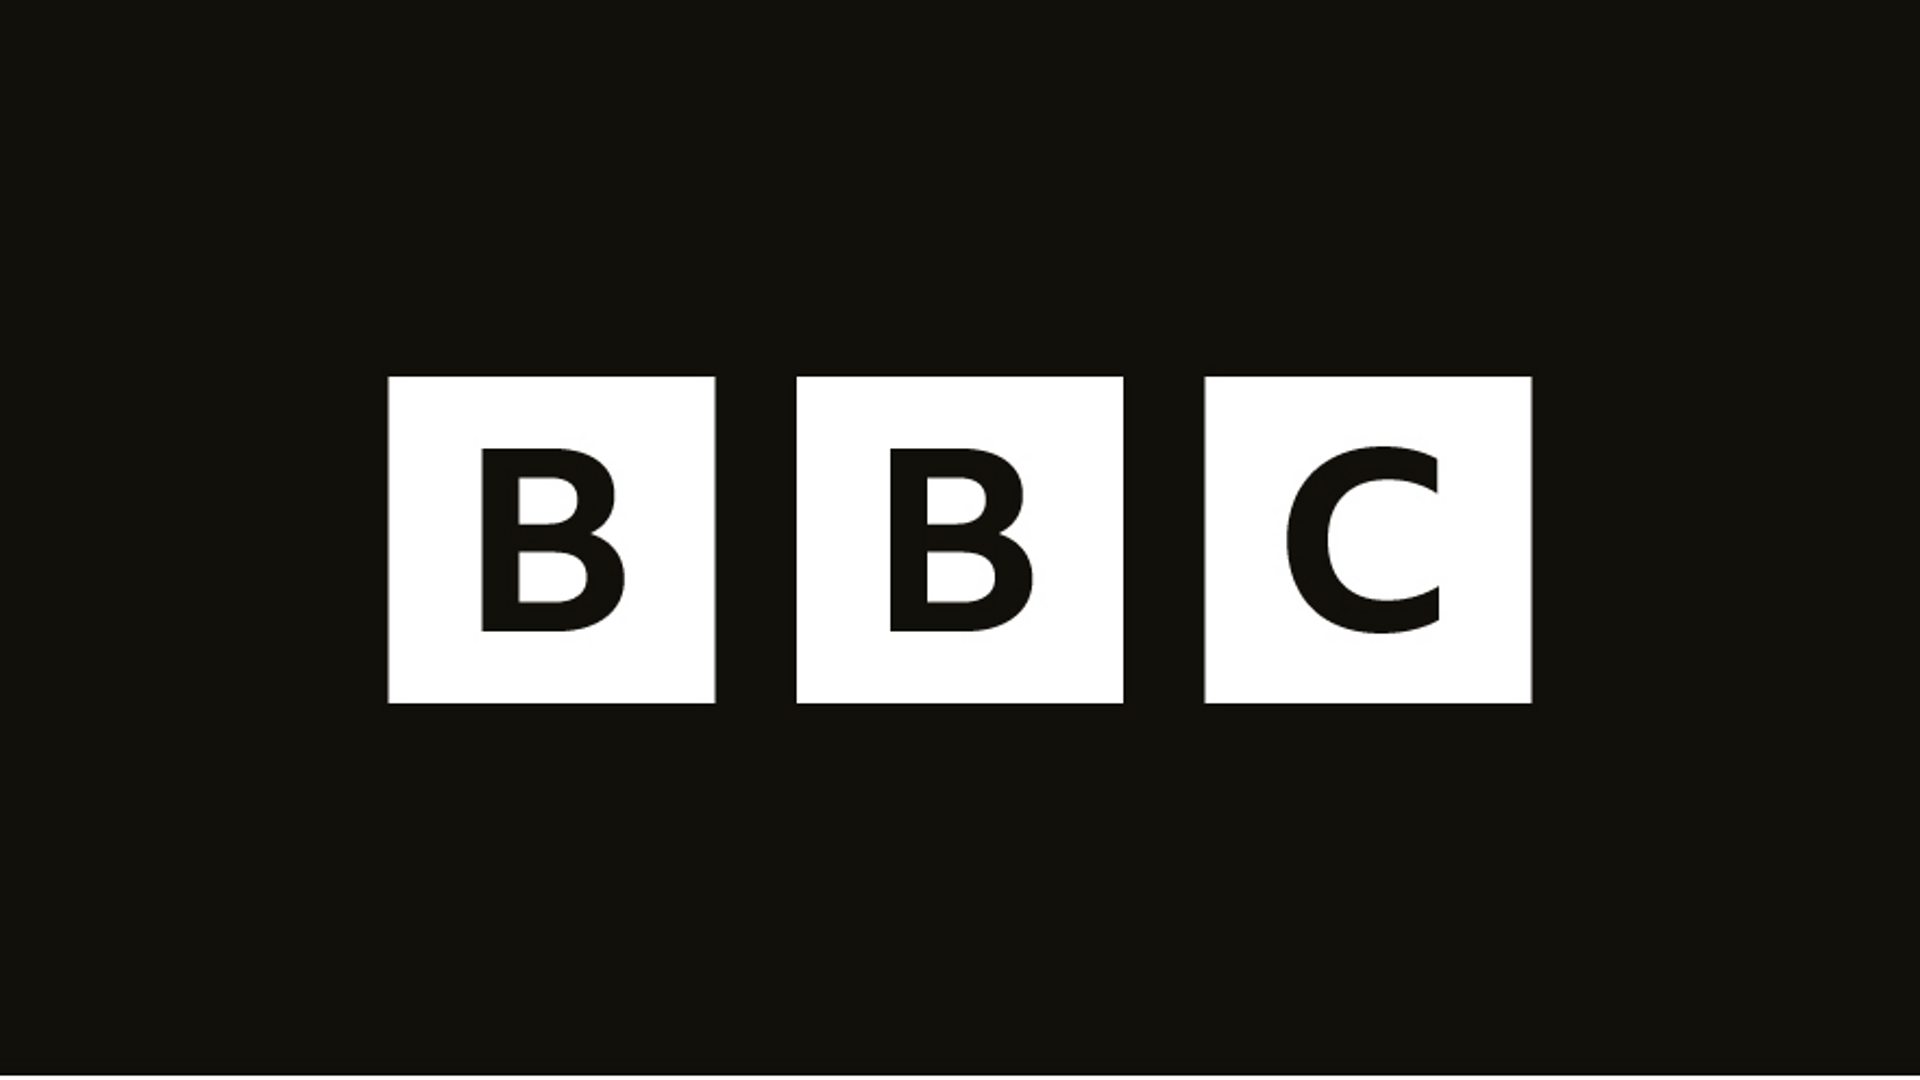 BBC bright data molly rose